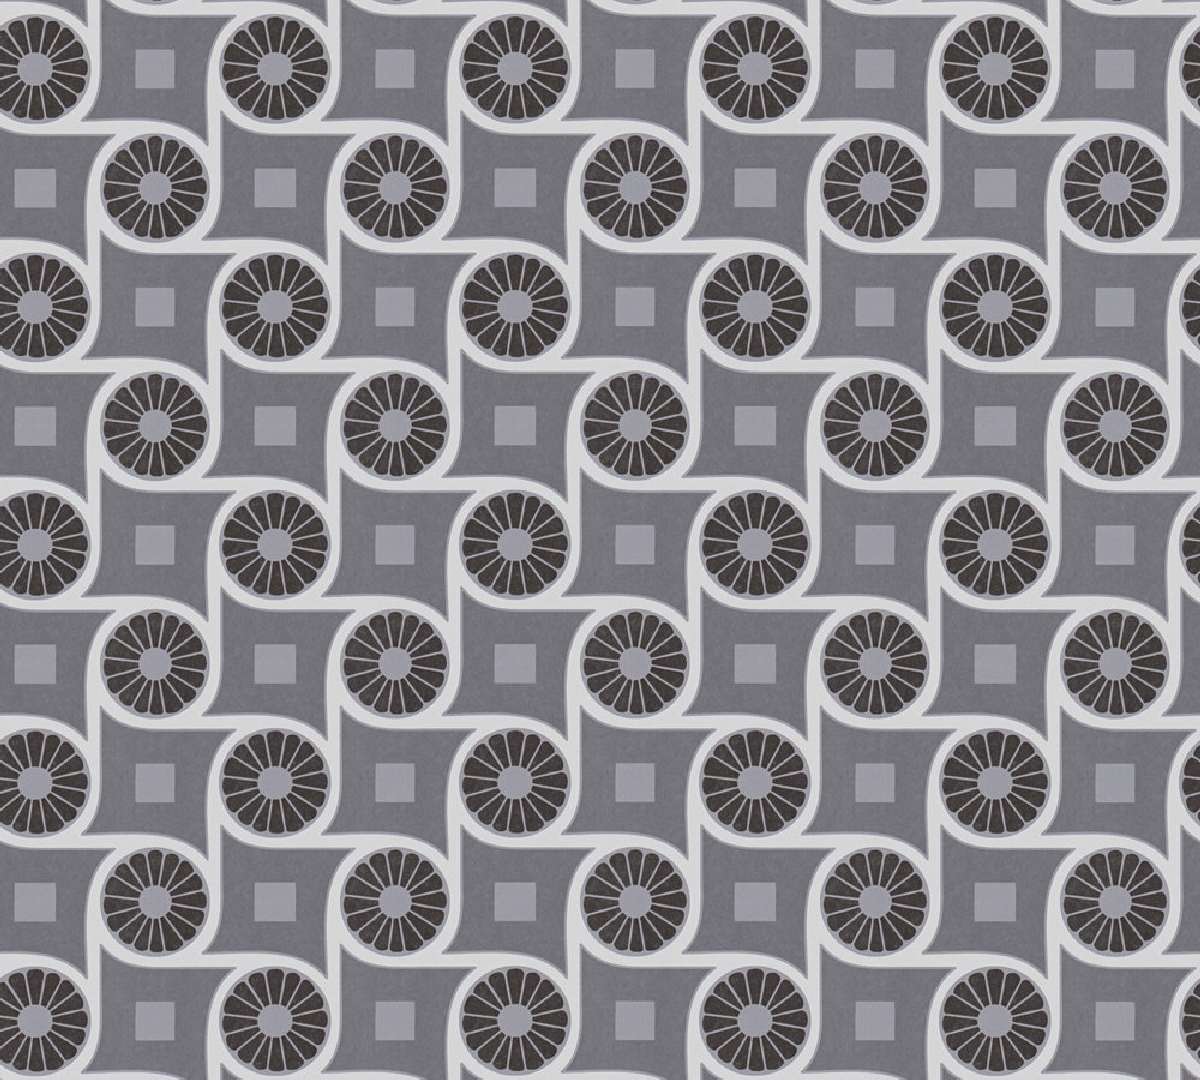 Vliestapete Art of Eden 390604 - Grafiktapete Muster - Grau, Weiß